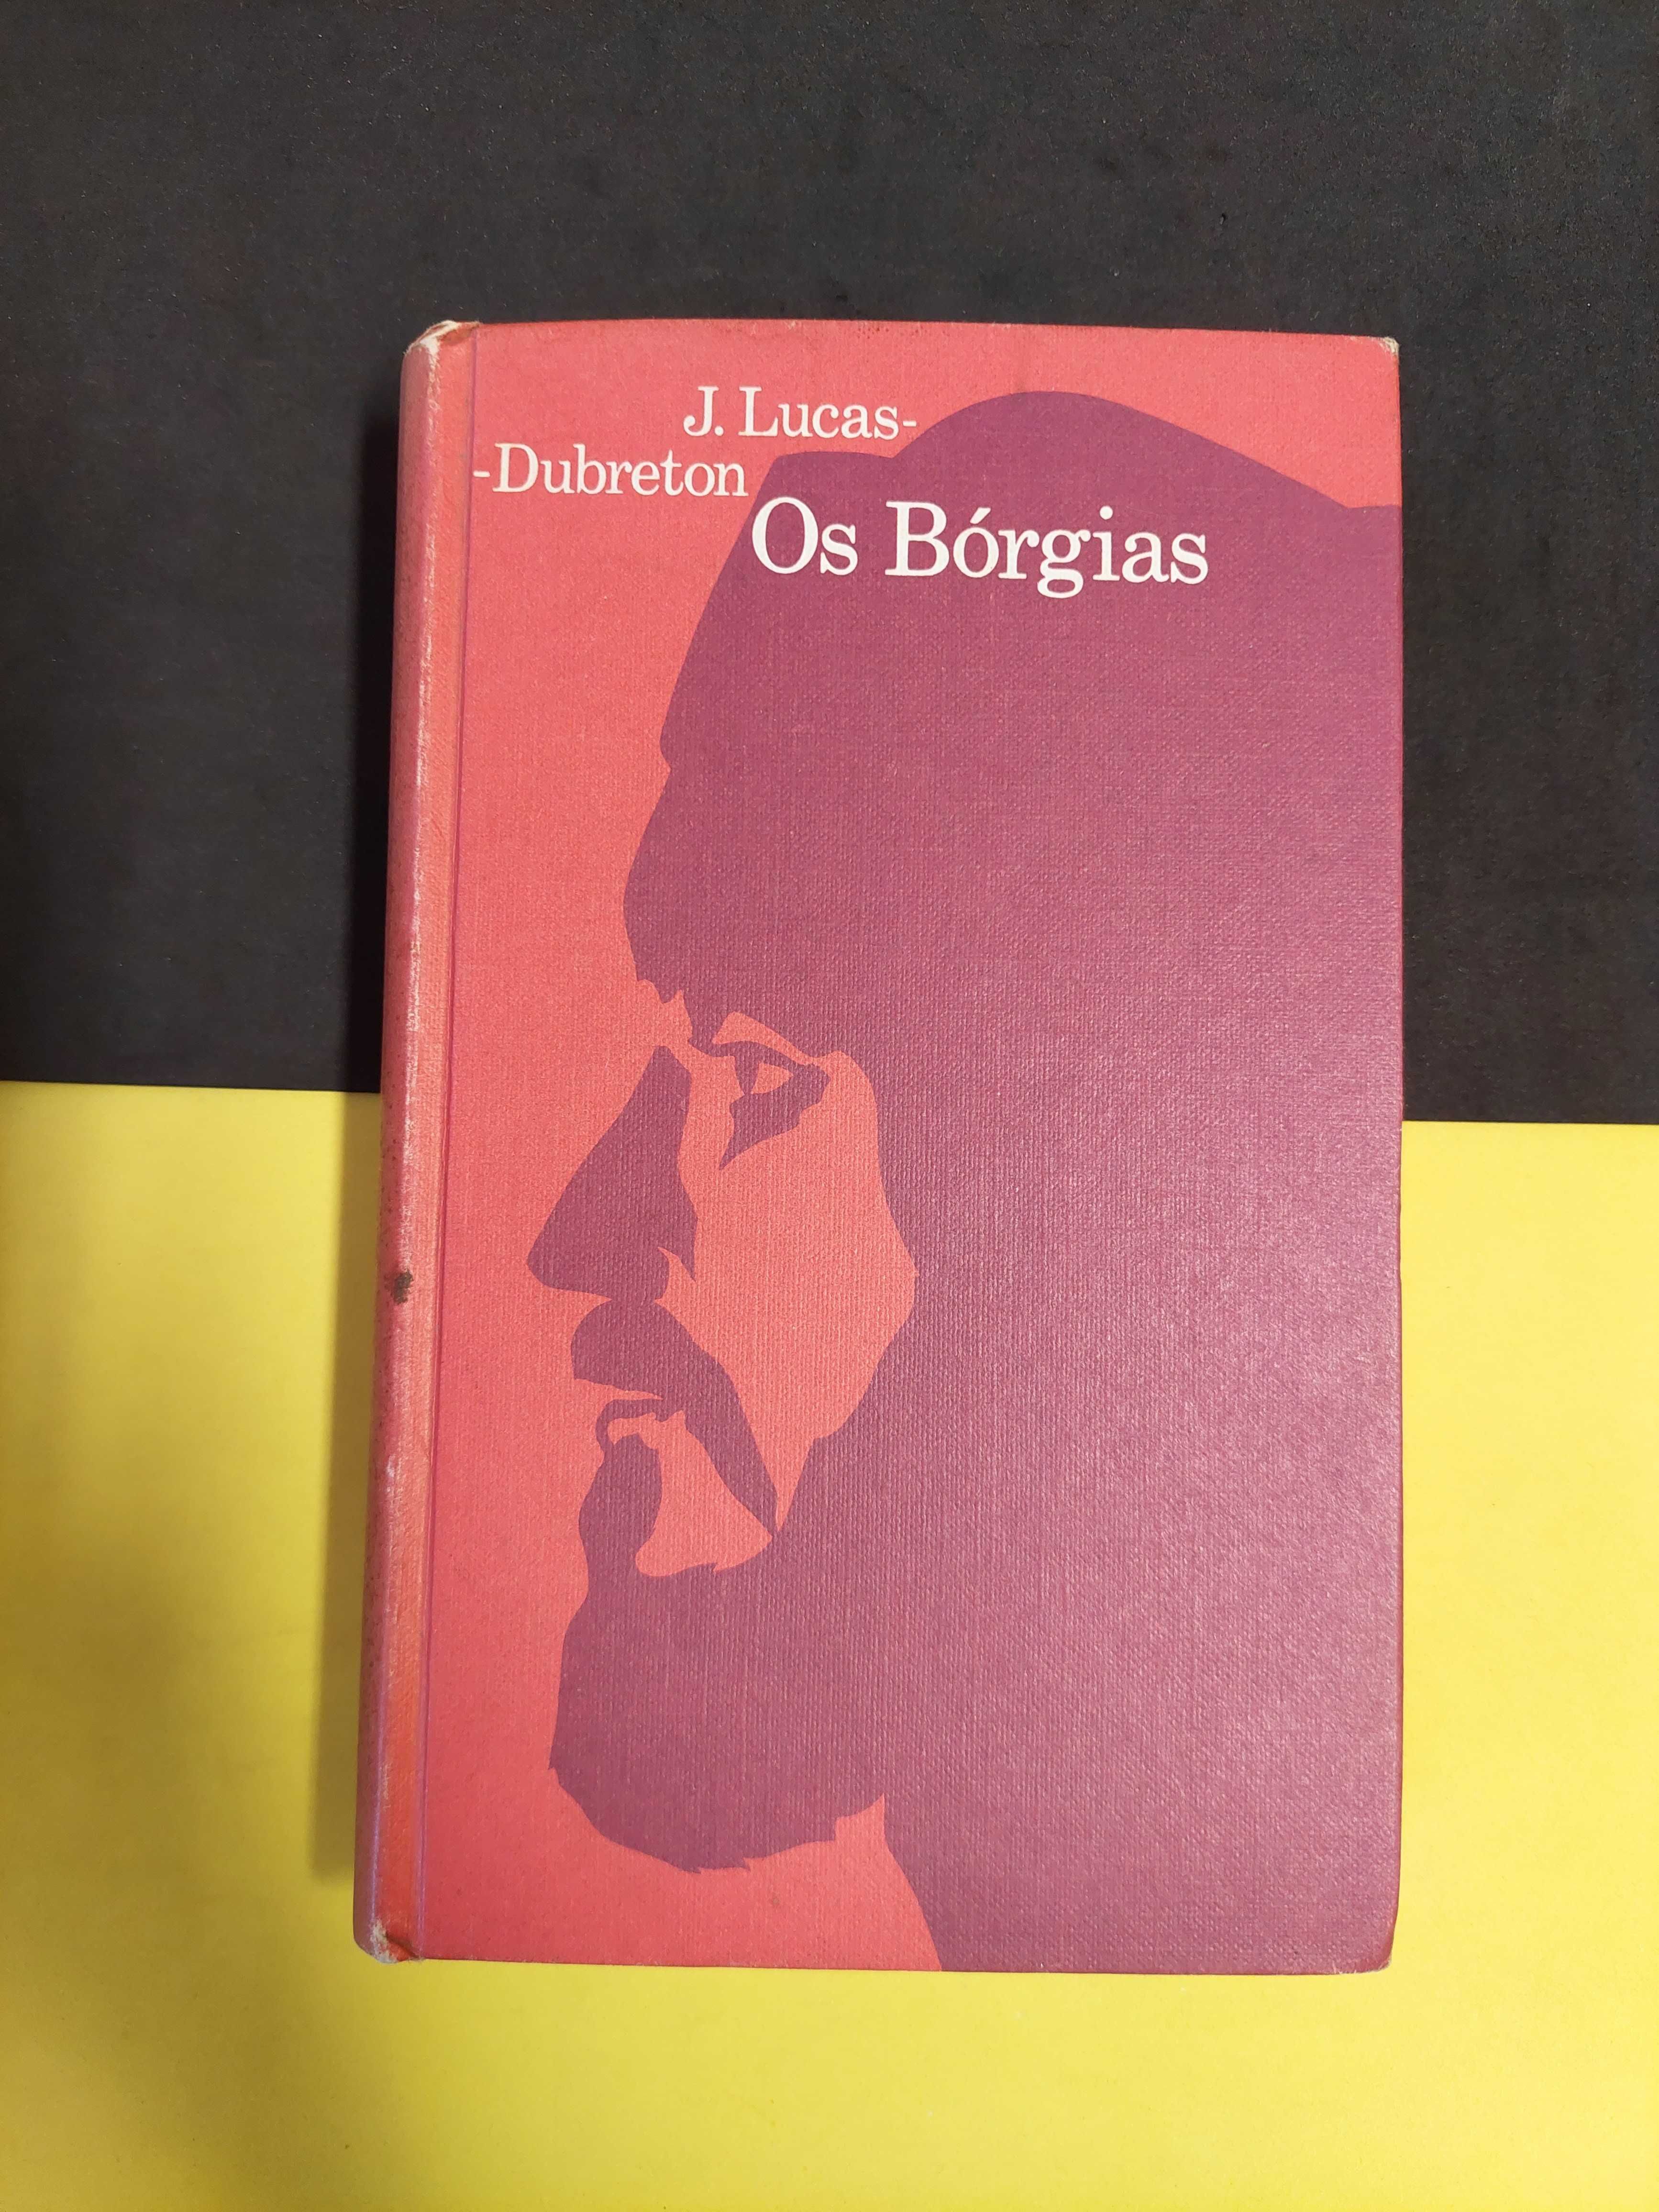 J. Lucas Dubreton - Os Bórgias